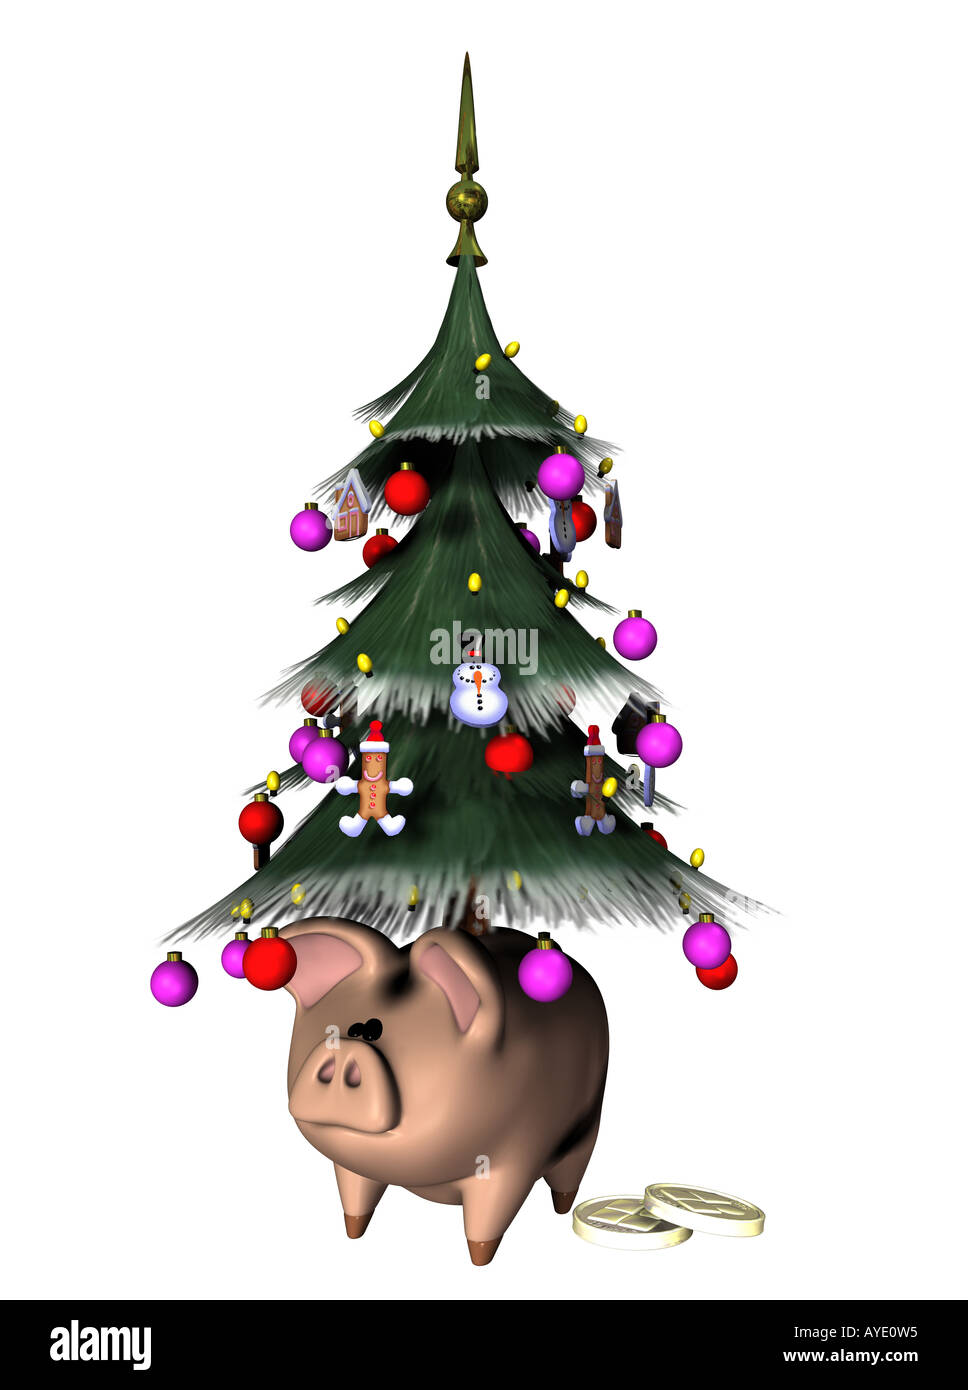 Arbre de Noël avec piggy bank Banque D'Images